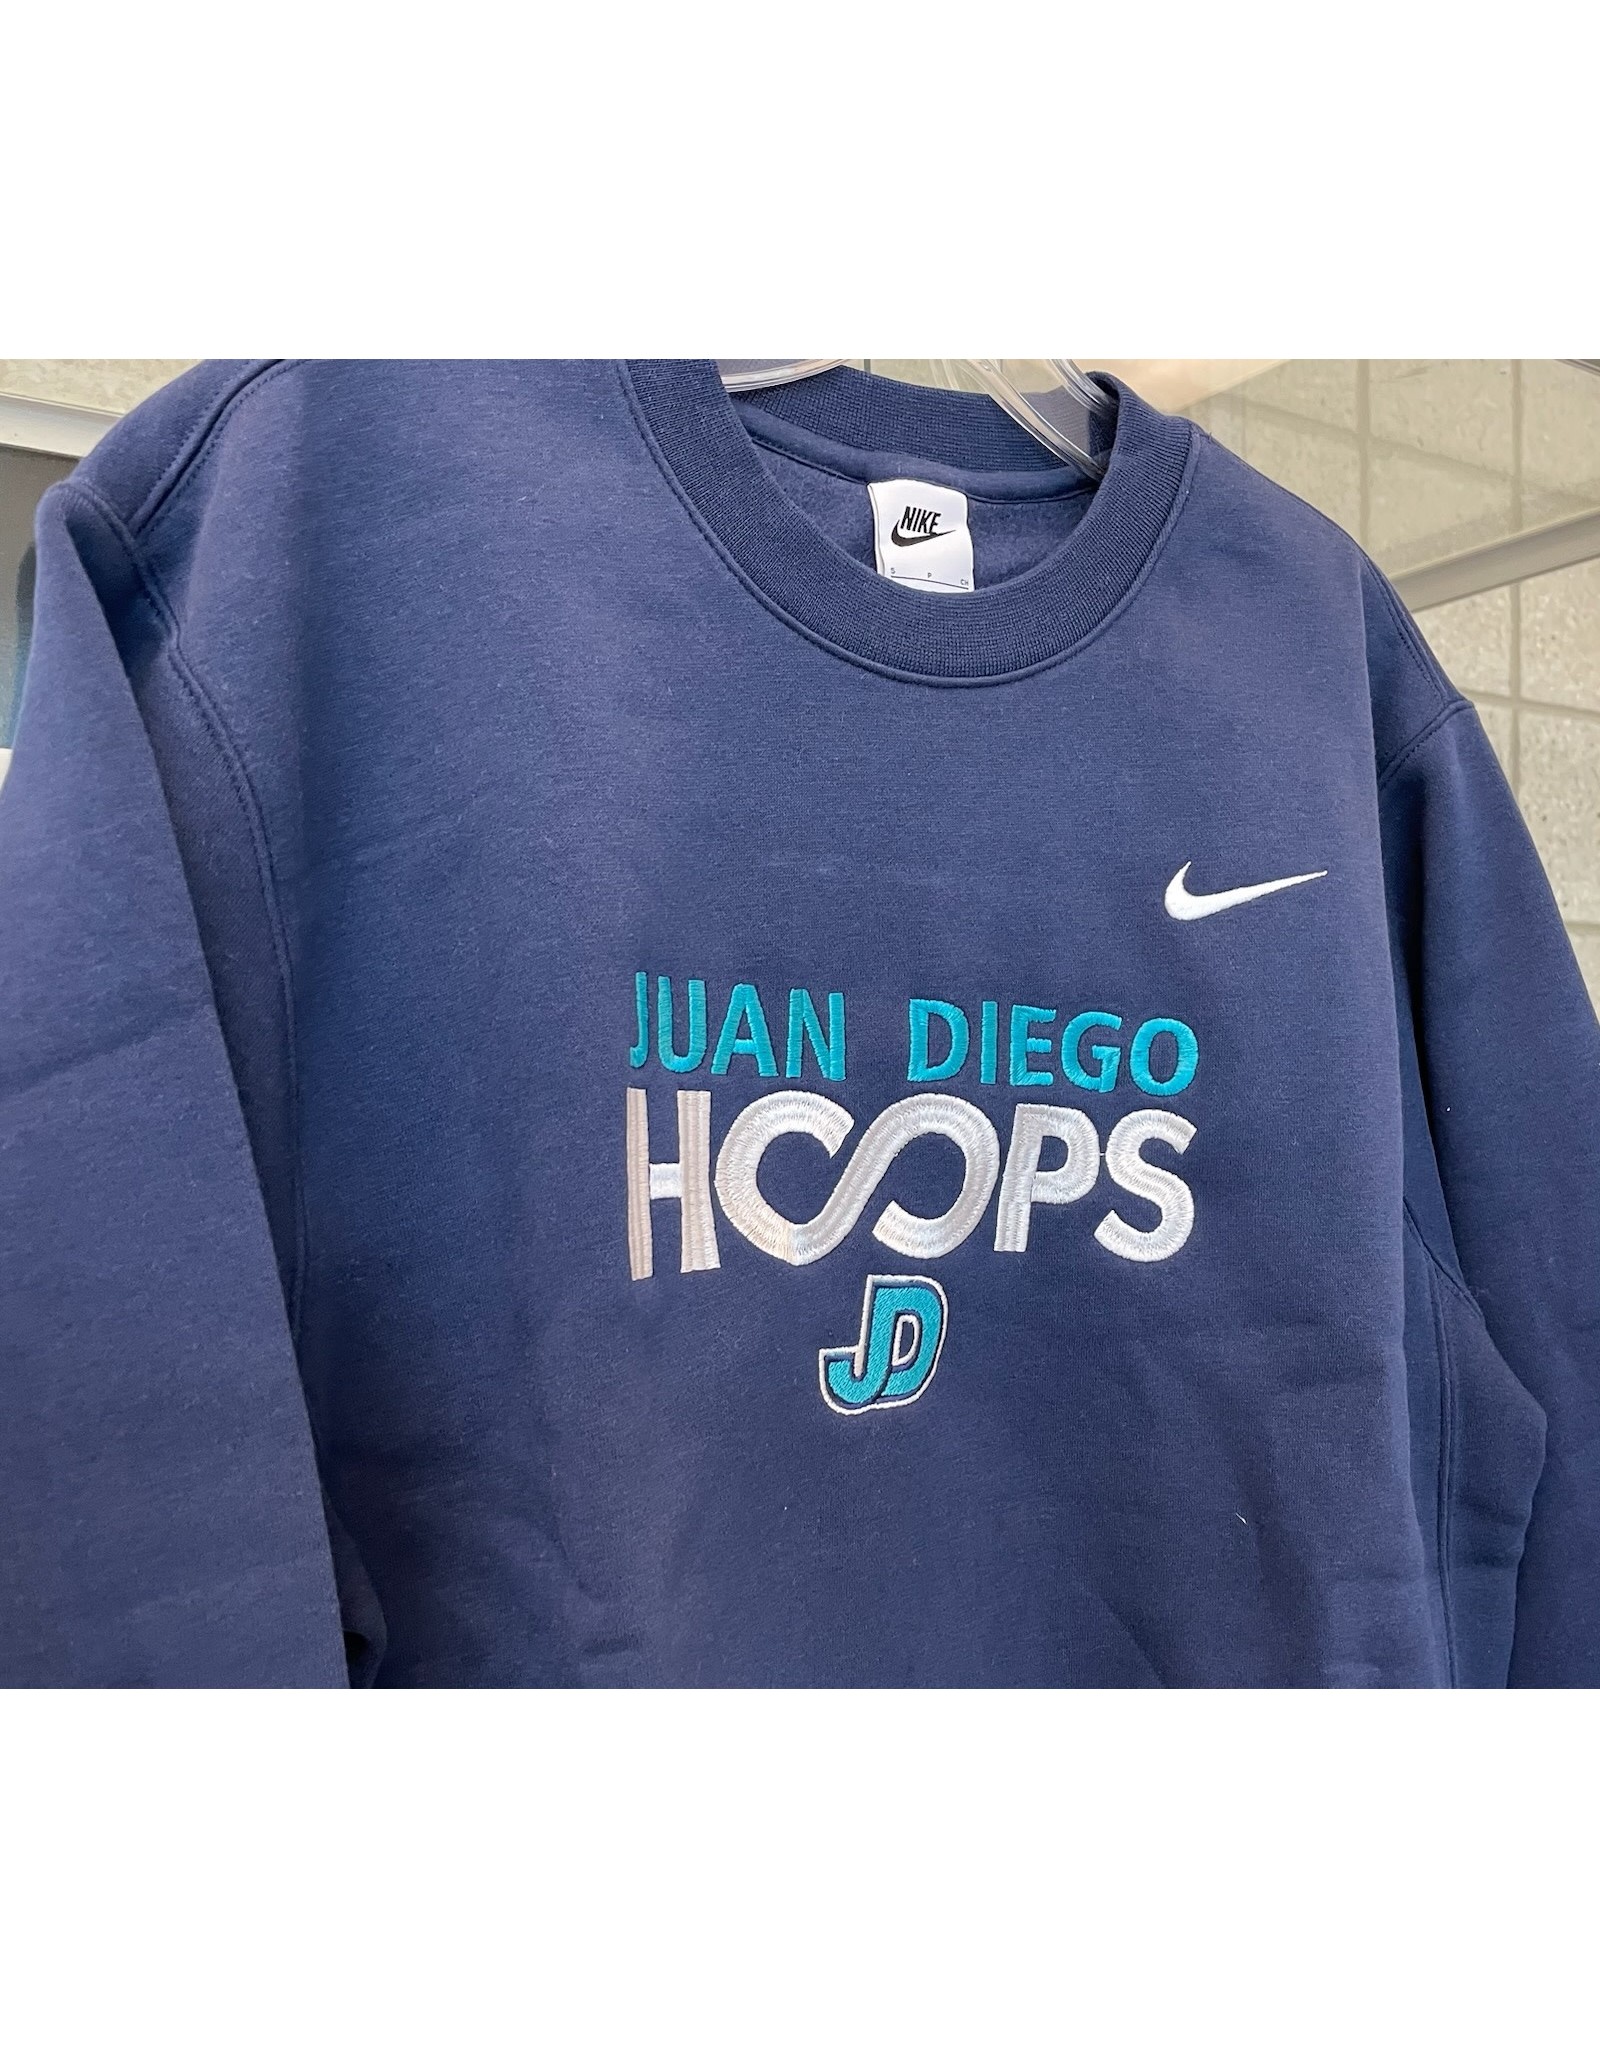 NON-UNIFORM Nike Custom Crew Basketball Sweatshirt. unisex